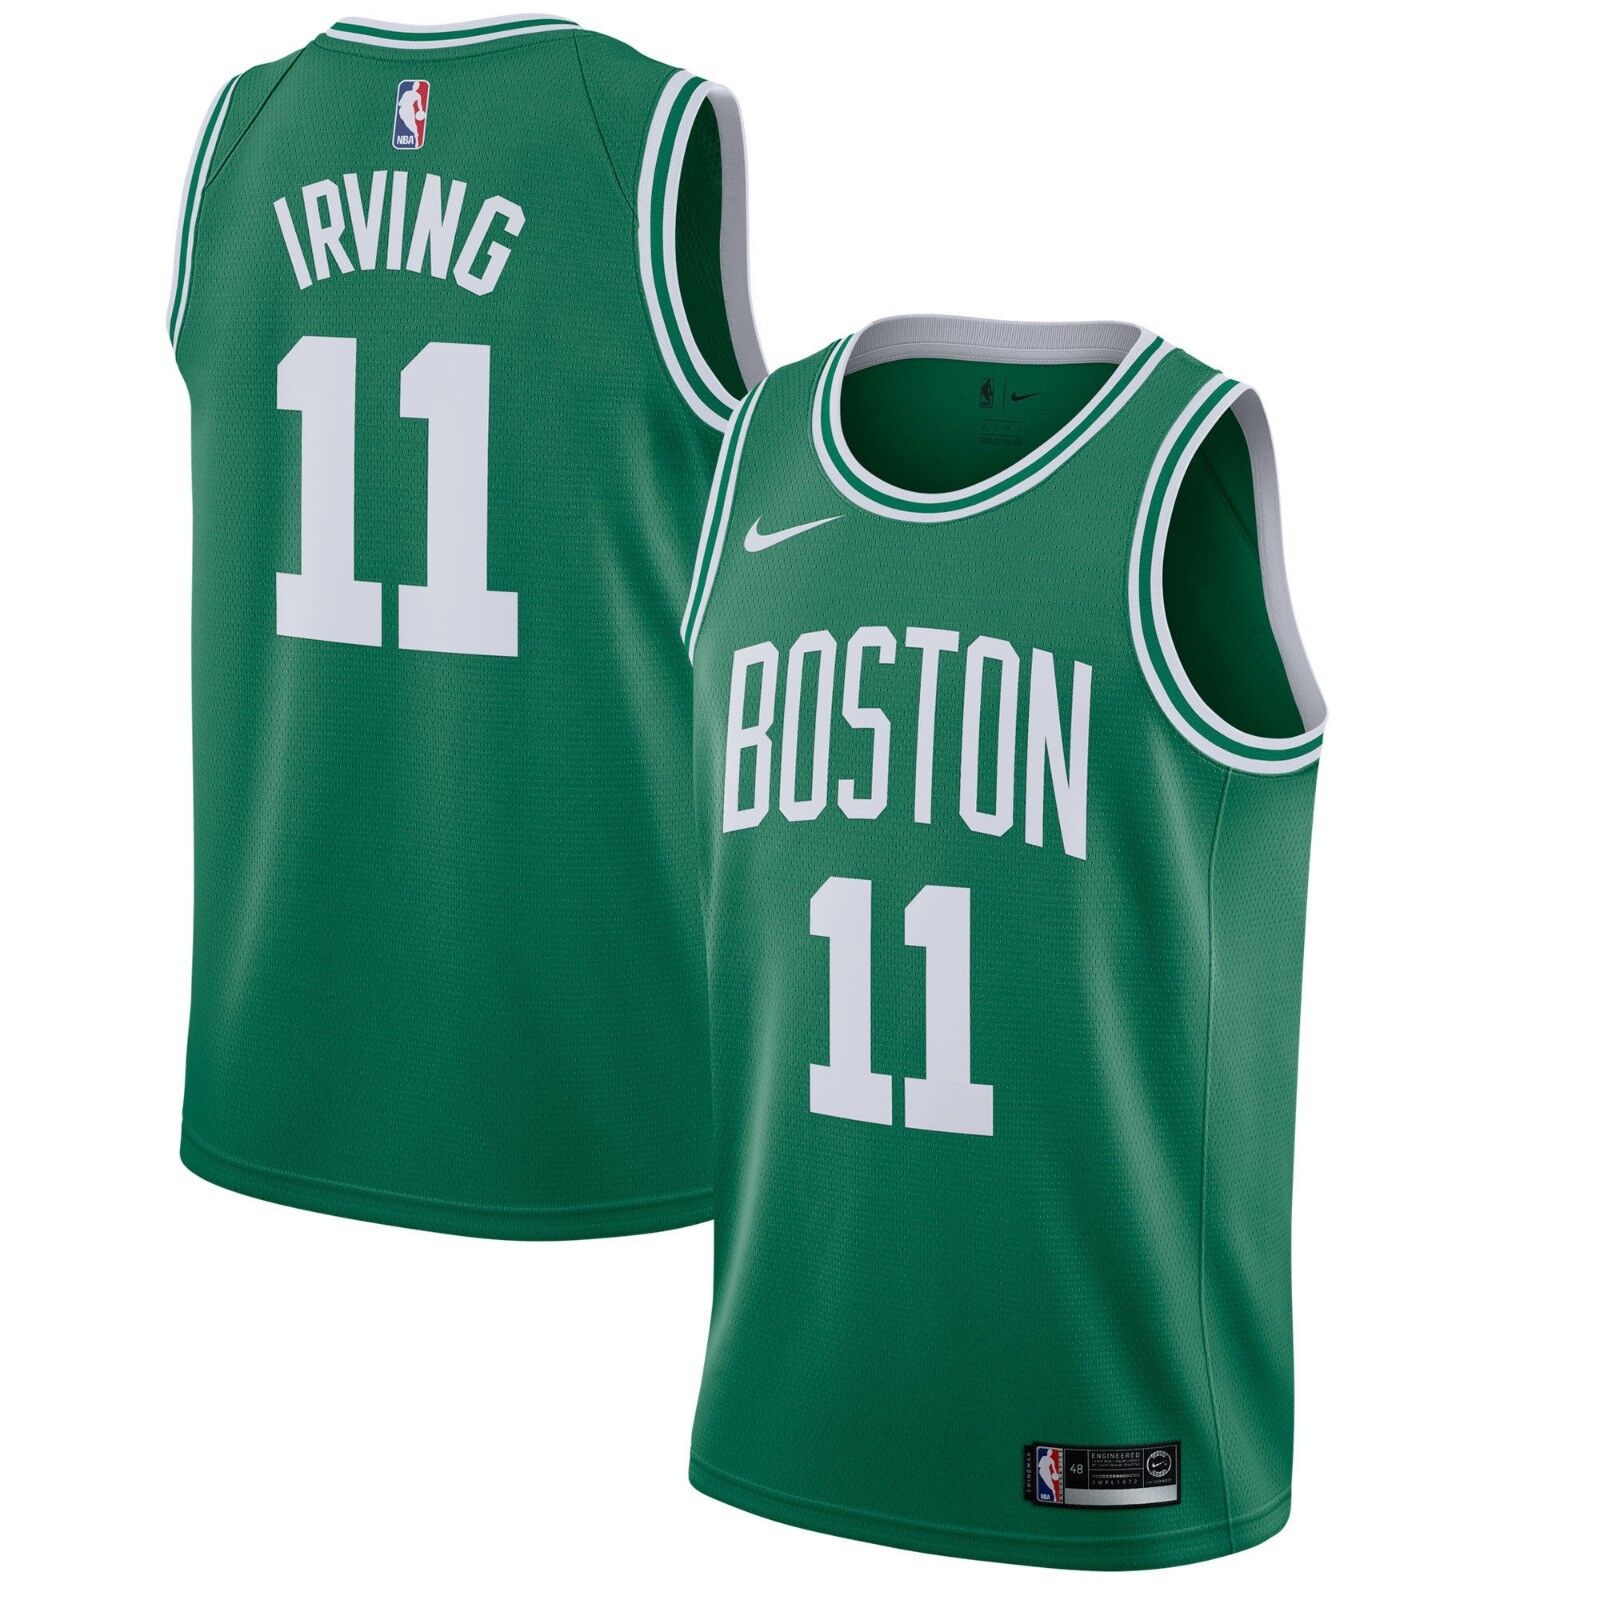 Velkendt værdi Troubled New Kyrie Irving Boston Celtics Nike Icon Edition Swingman Jersey Men's  2017 NBA | eBay